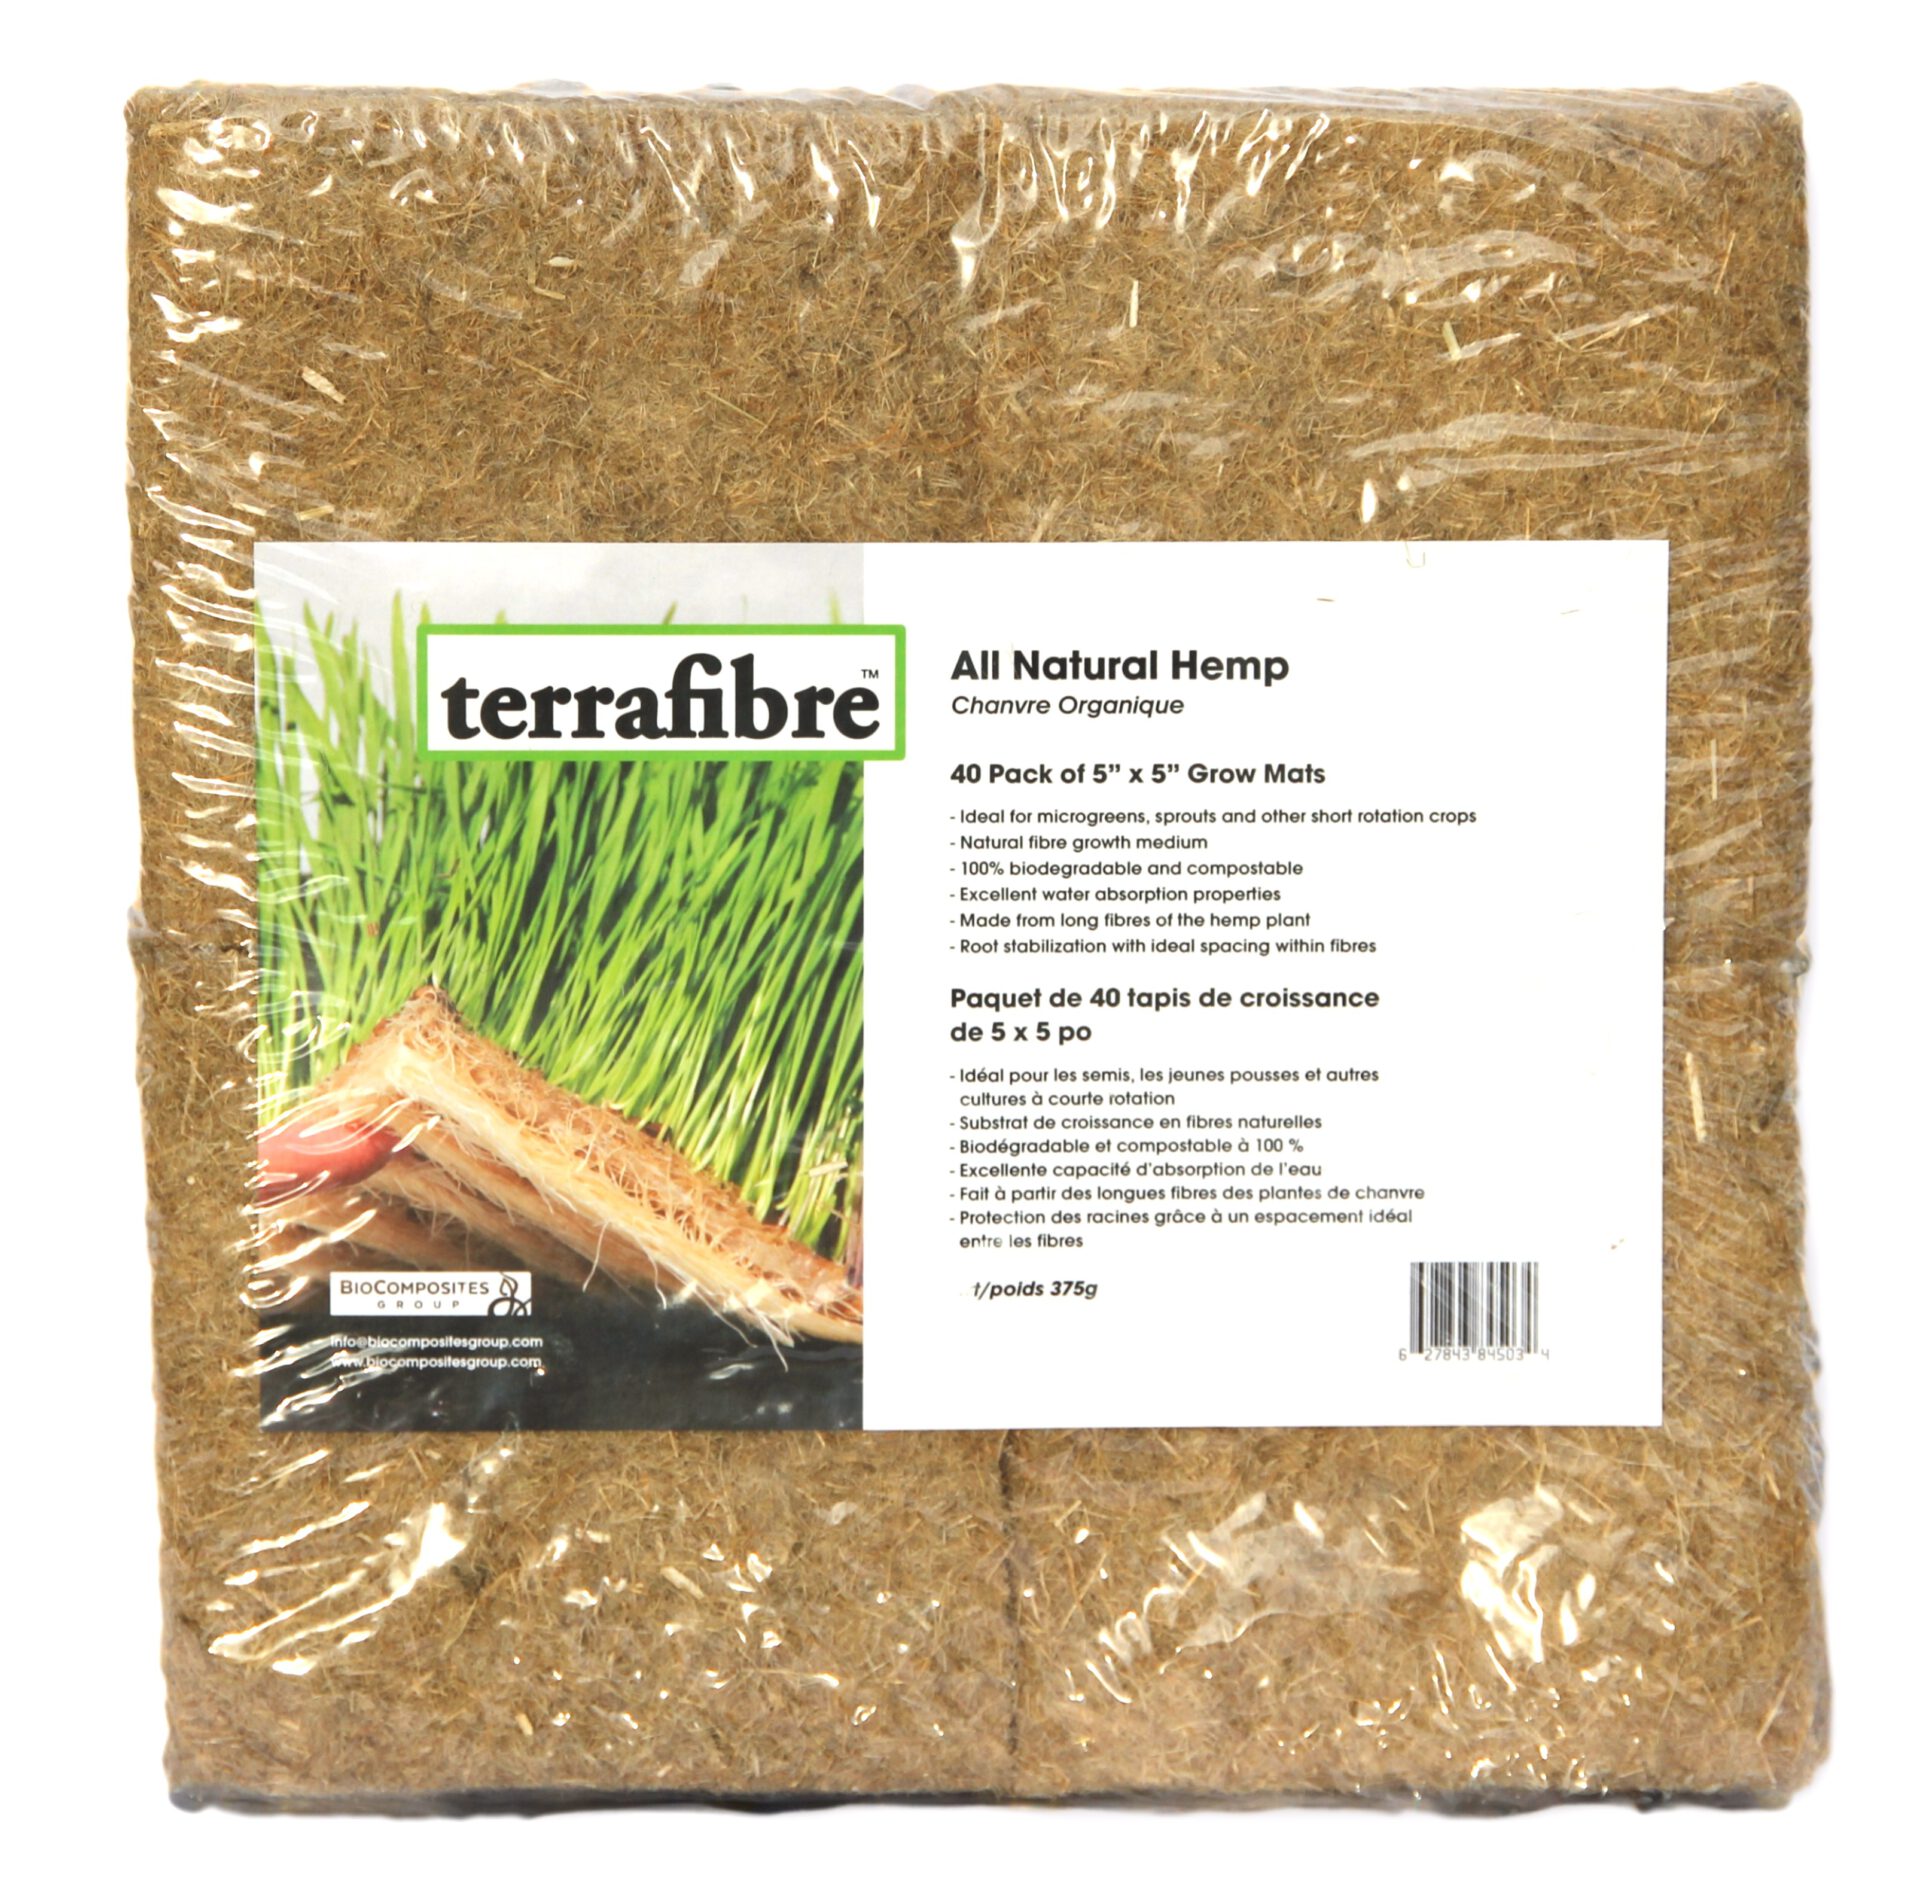 Grow mat 5" x 5" - 40 pack for growing microgreens